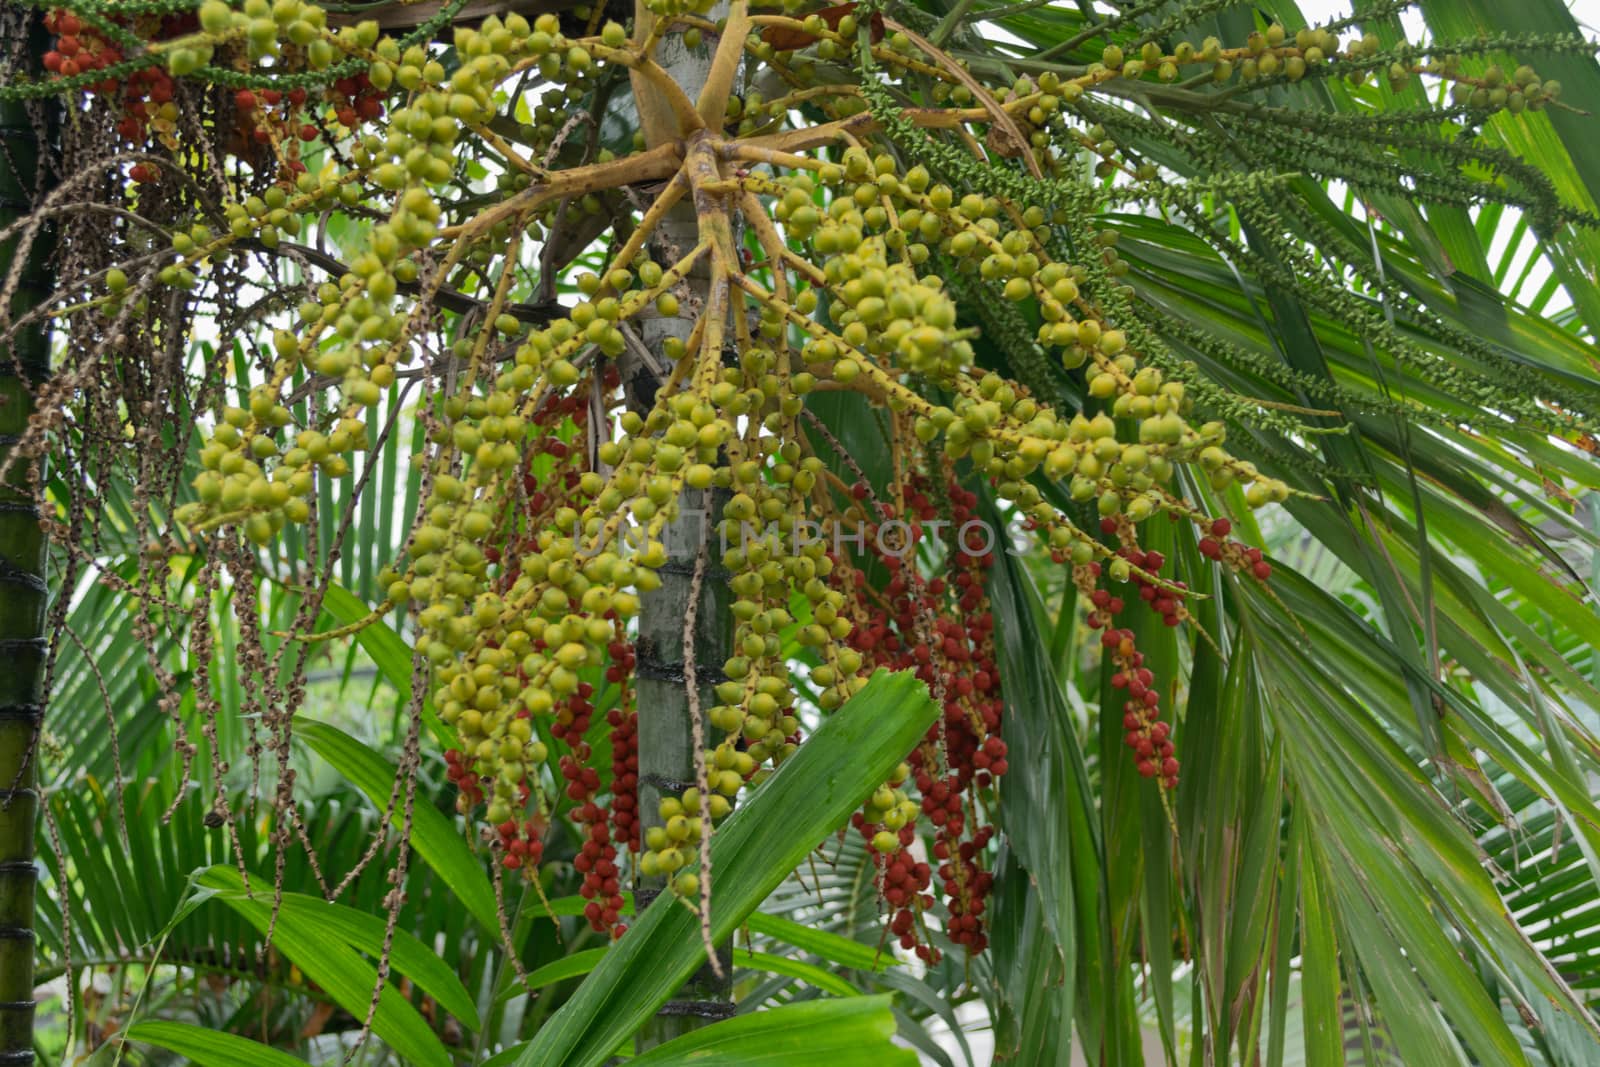 Areca nut of tropical palm tree
 by Banglade